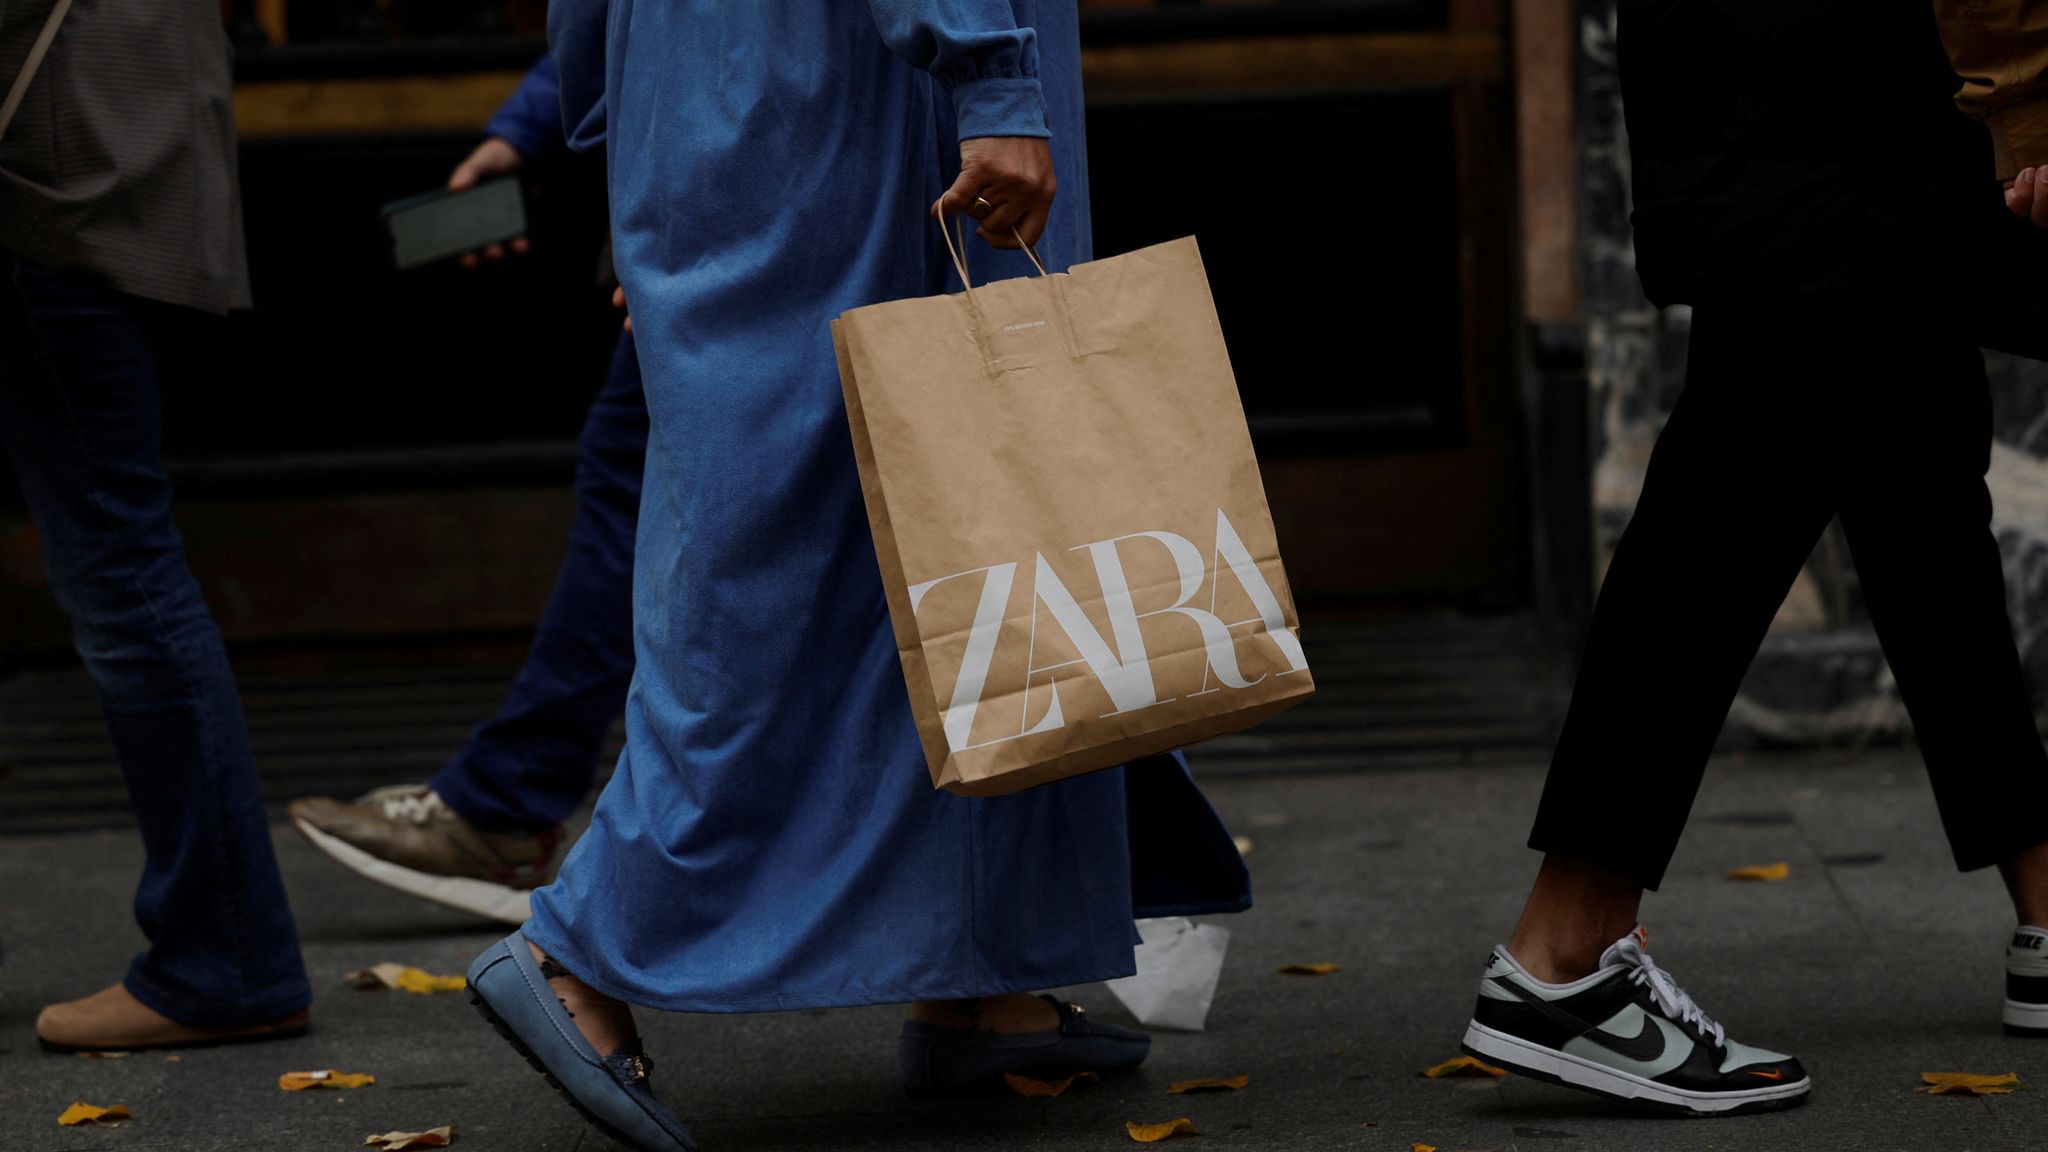 Zara pulls advert accused of Gaza insensitivity